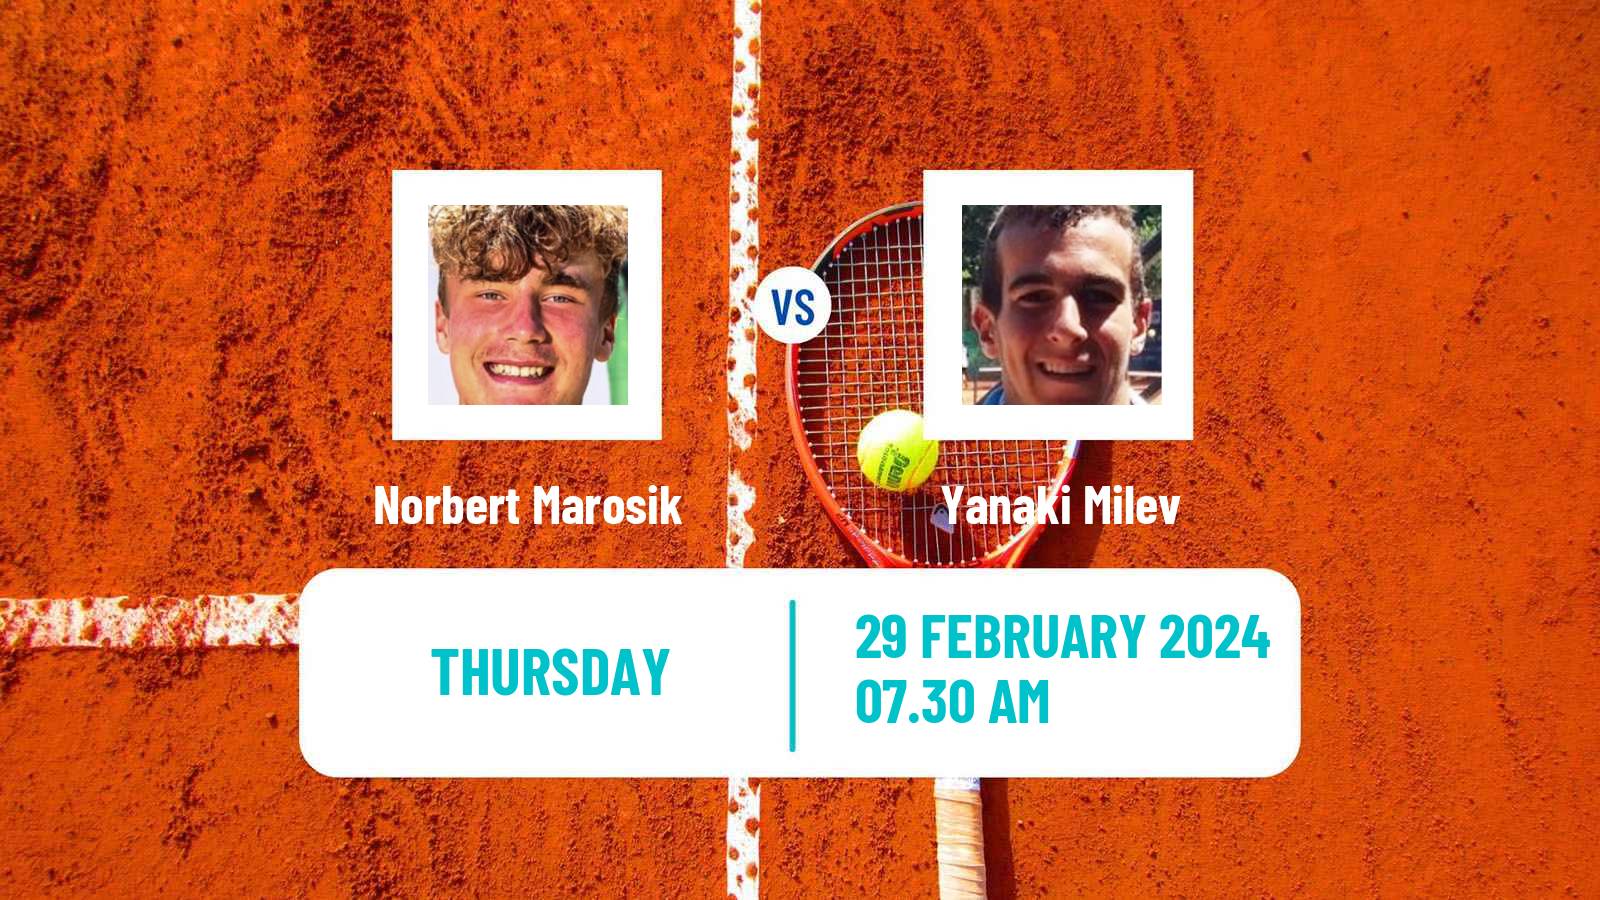 Tennis ITF M15 Antalya 4 Men Norbert Marosik - Yanaki Milev